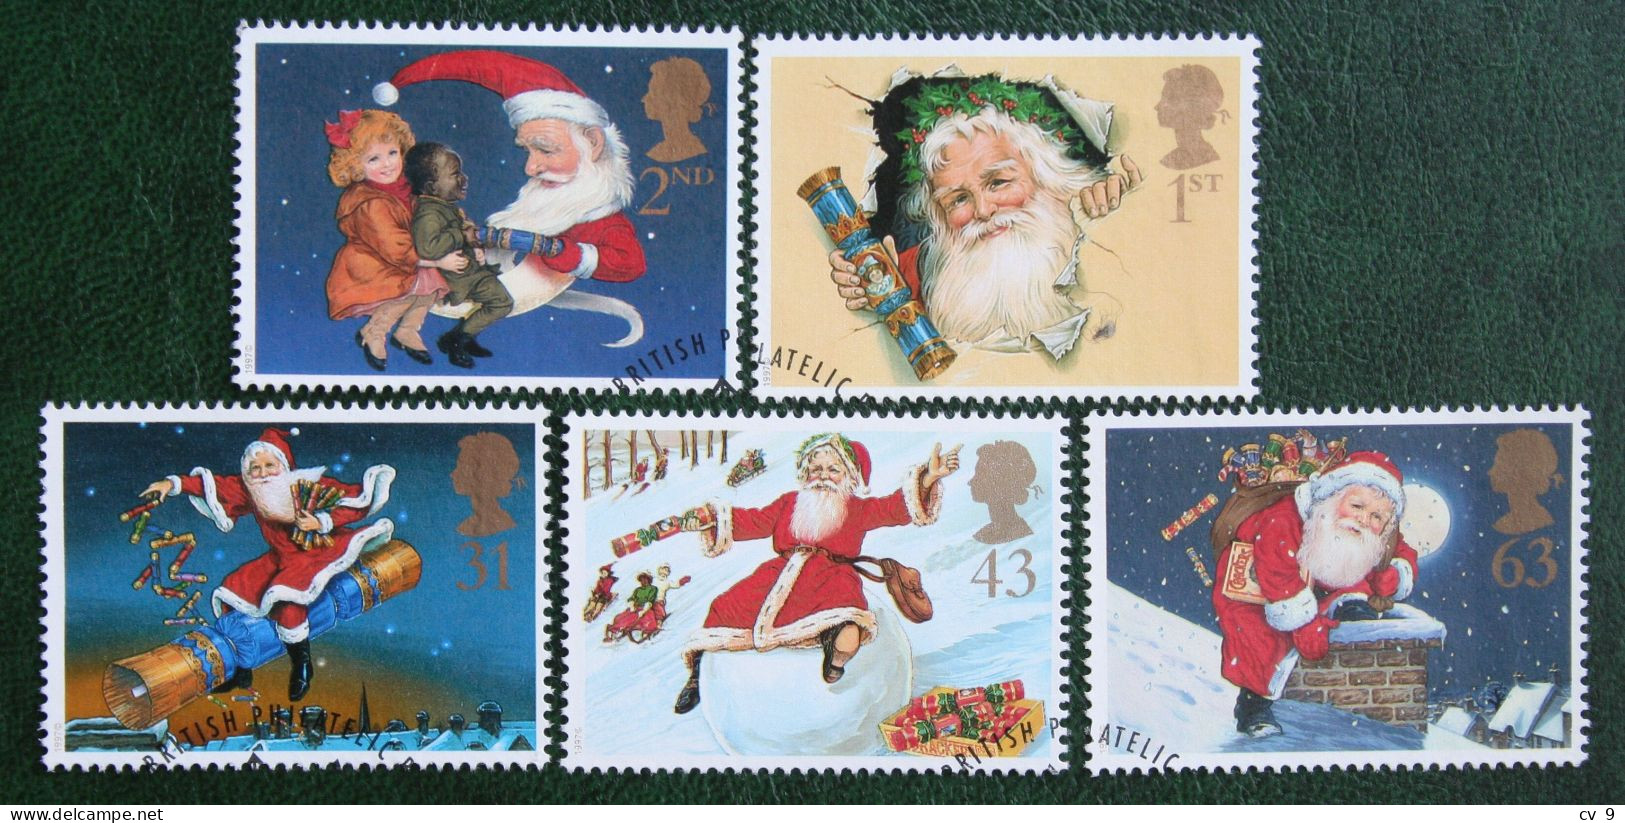 Natale Weihnachten Xmas Noel Kerst (Mi 1714-1718) 1997 Used Gebruikt Oblitere ENGLAND GRANDE-BRETAGNE GB GREAT BRITAIN - Gebruikt